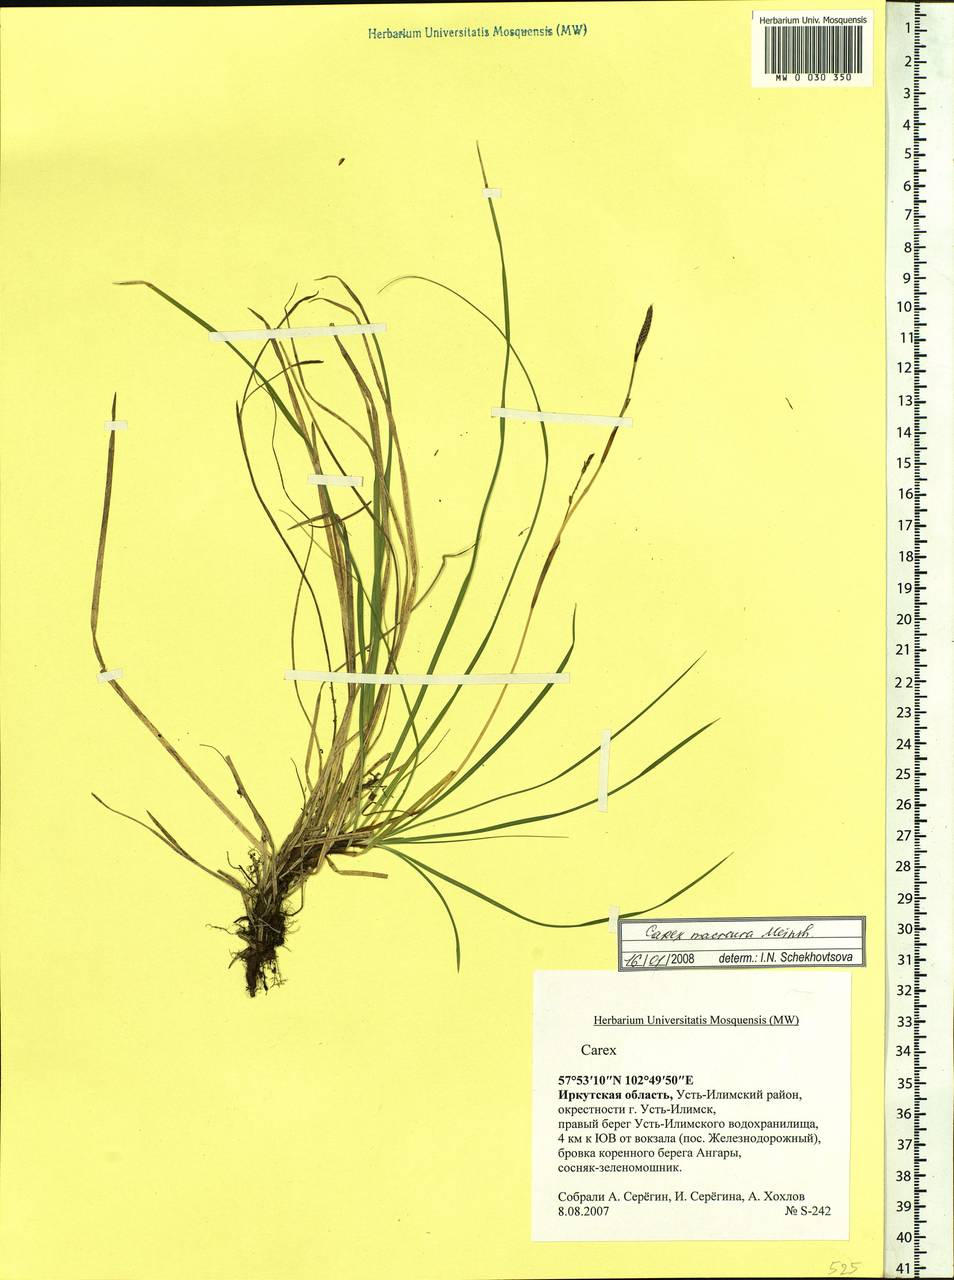 Carex pediformis var. macroura (Meinsh.) Kük., Siberia, Baikal & Transbaikal region (S4) (Russia)